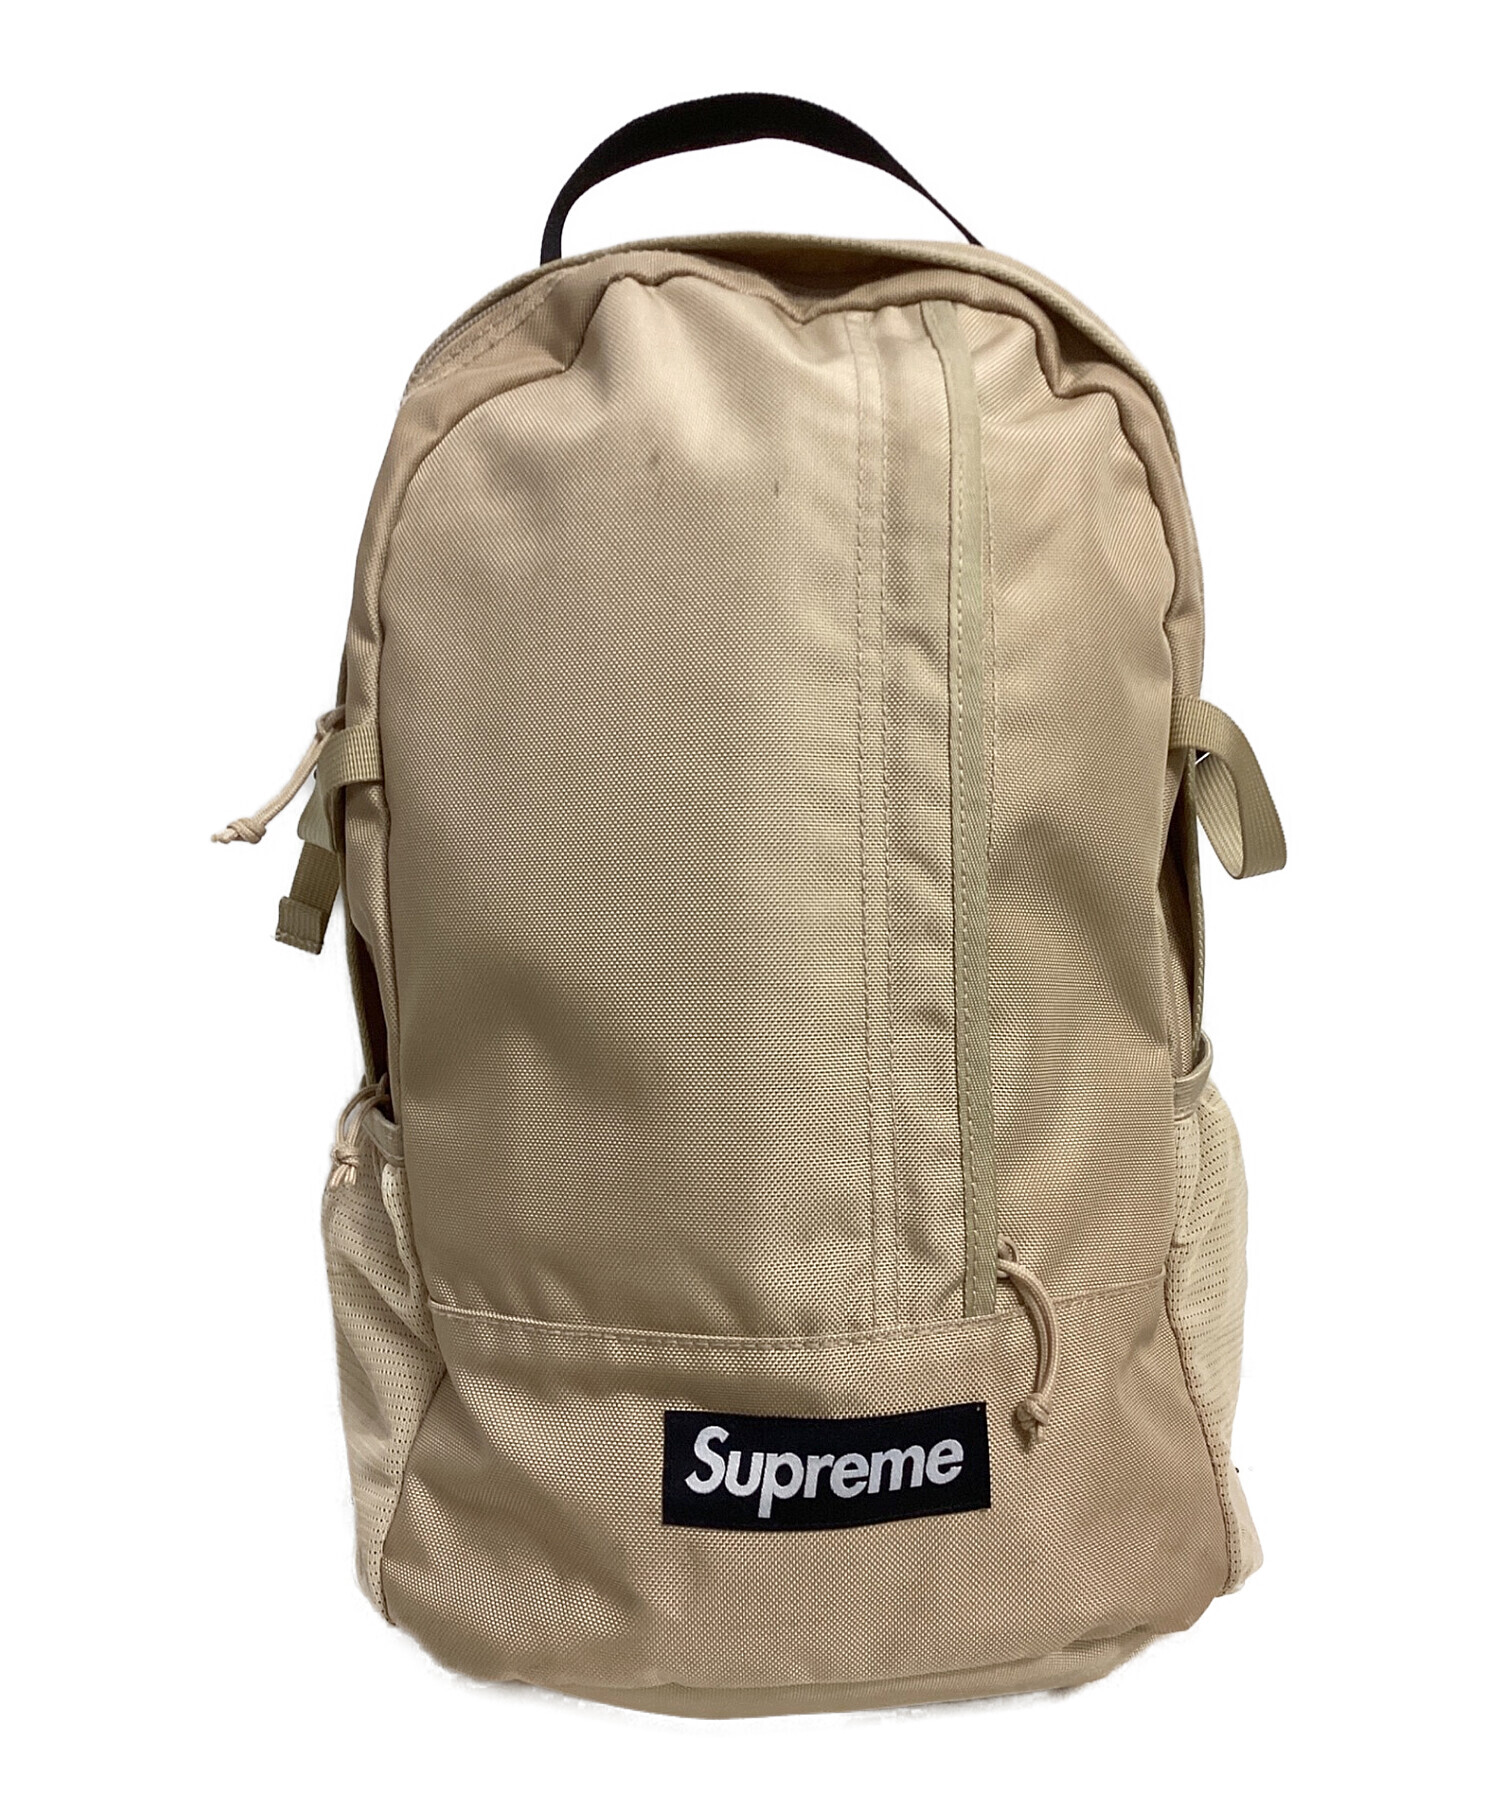 supreme 18ss backpack